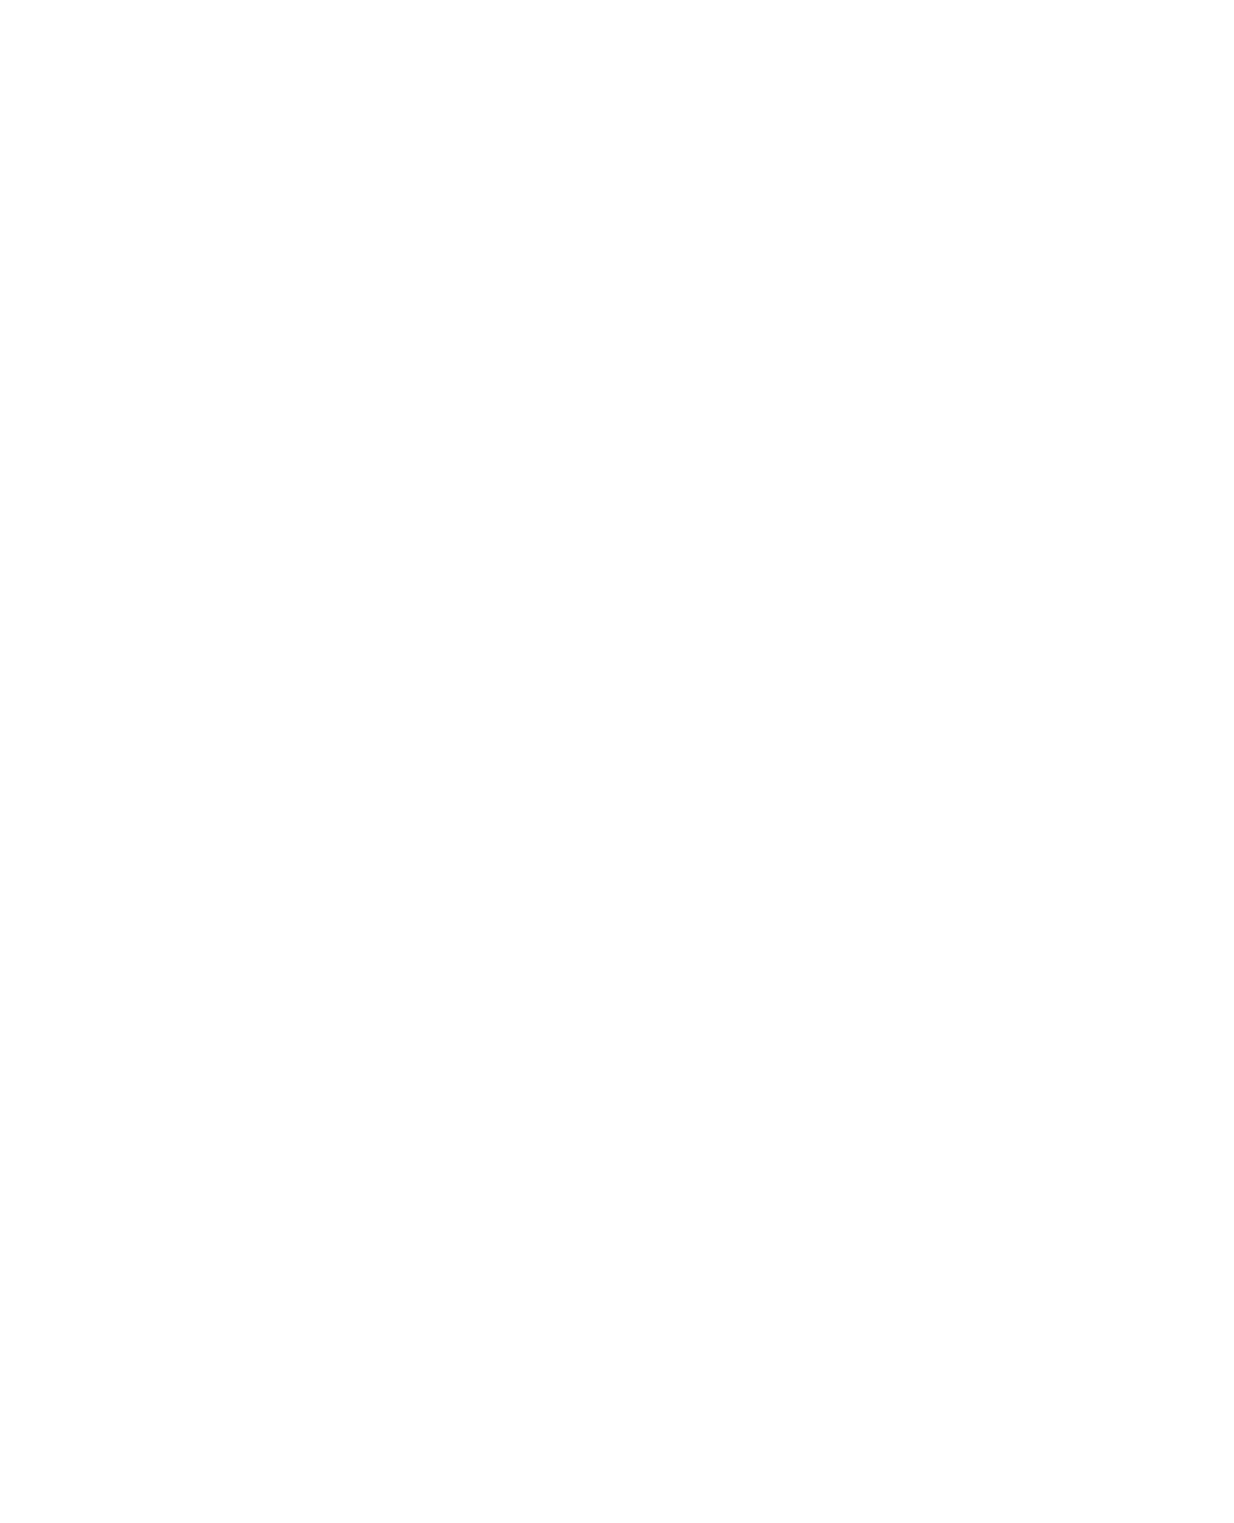 PetGas (Petronas Gas) logo pour fonds sombres (PNG transparent)